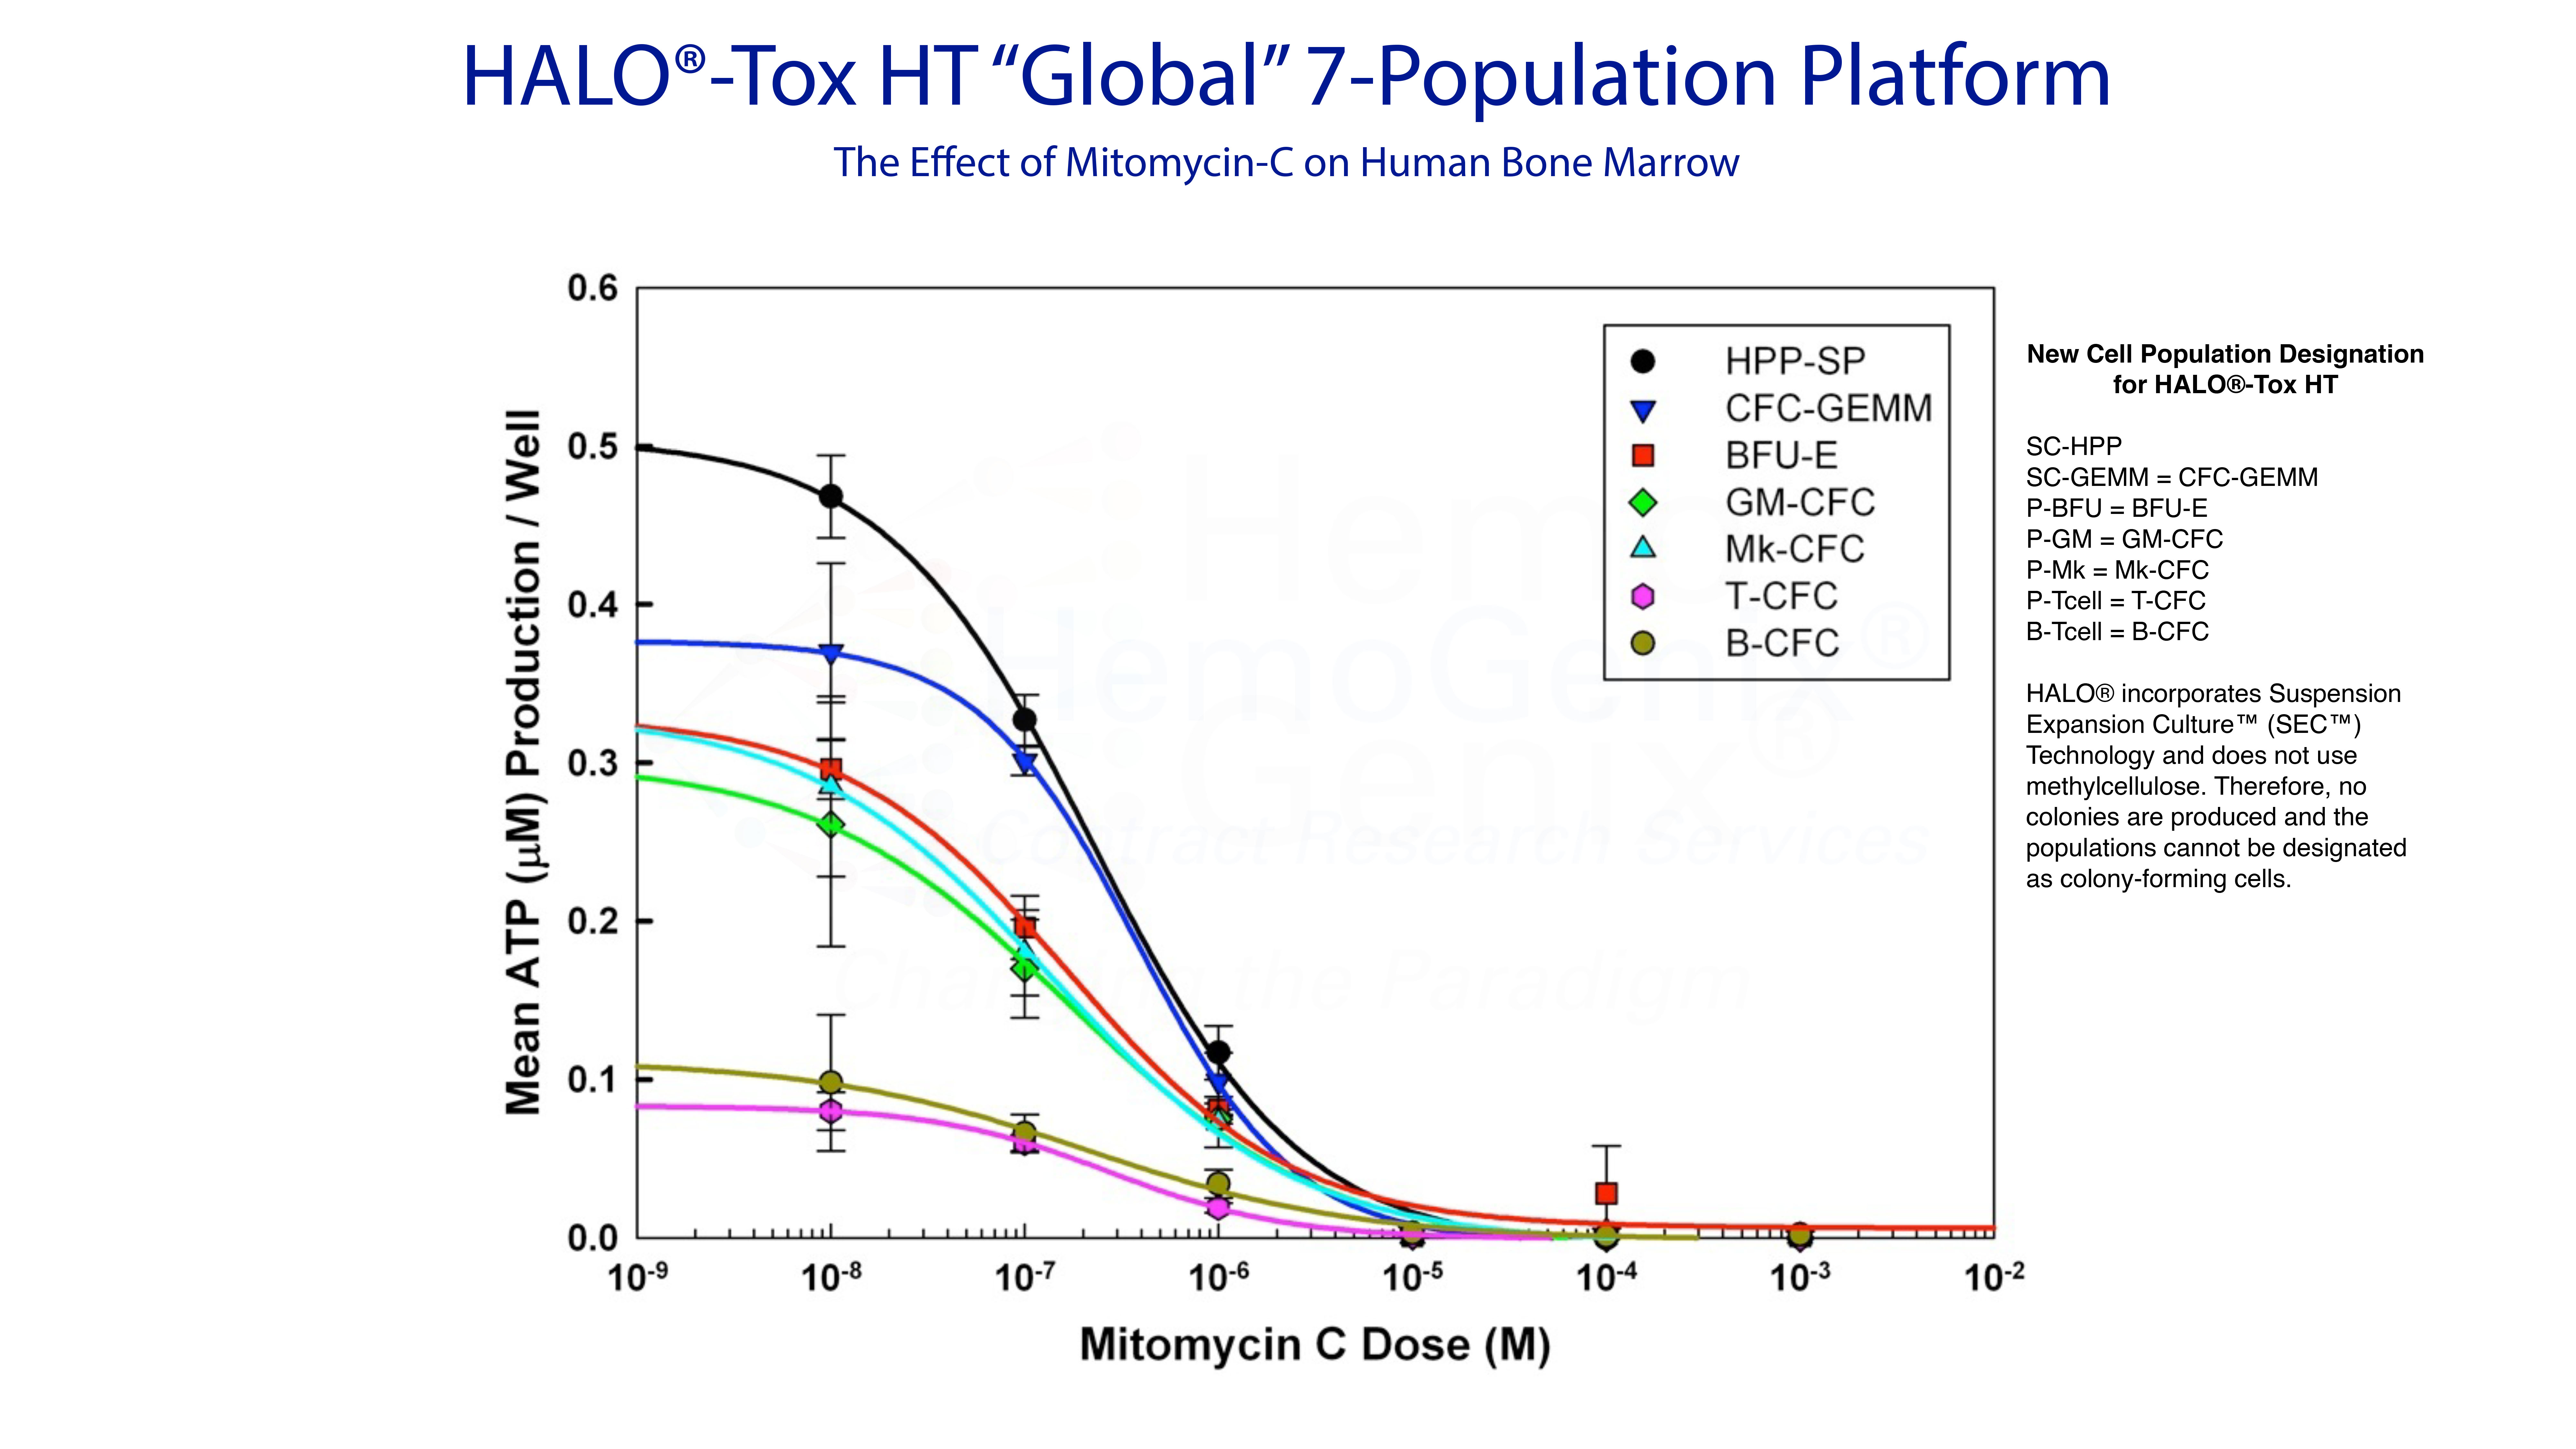 HALO-Tox HT "Global" 7-Population Hematotoxicity Platform